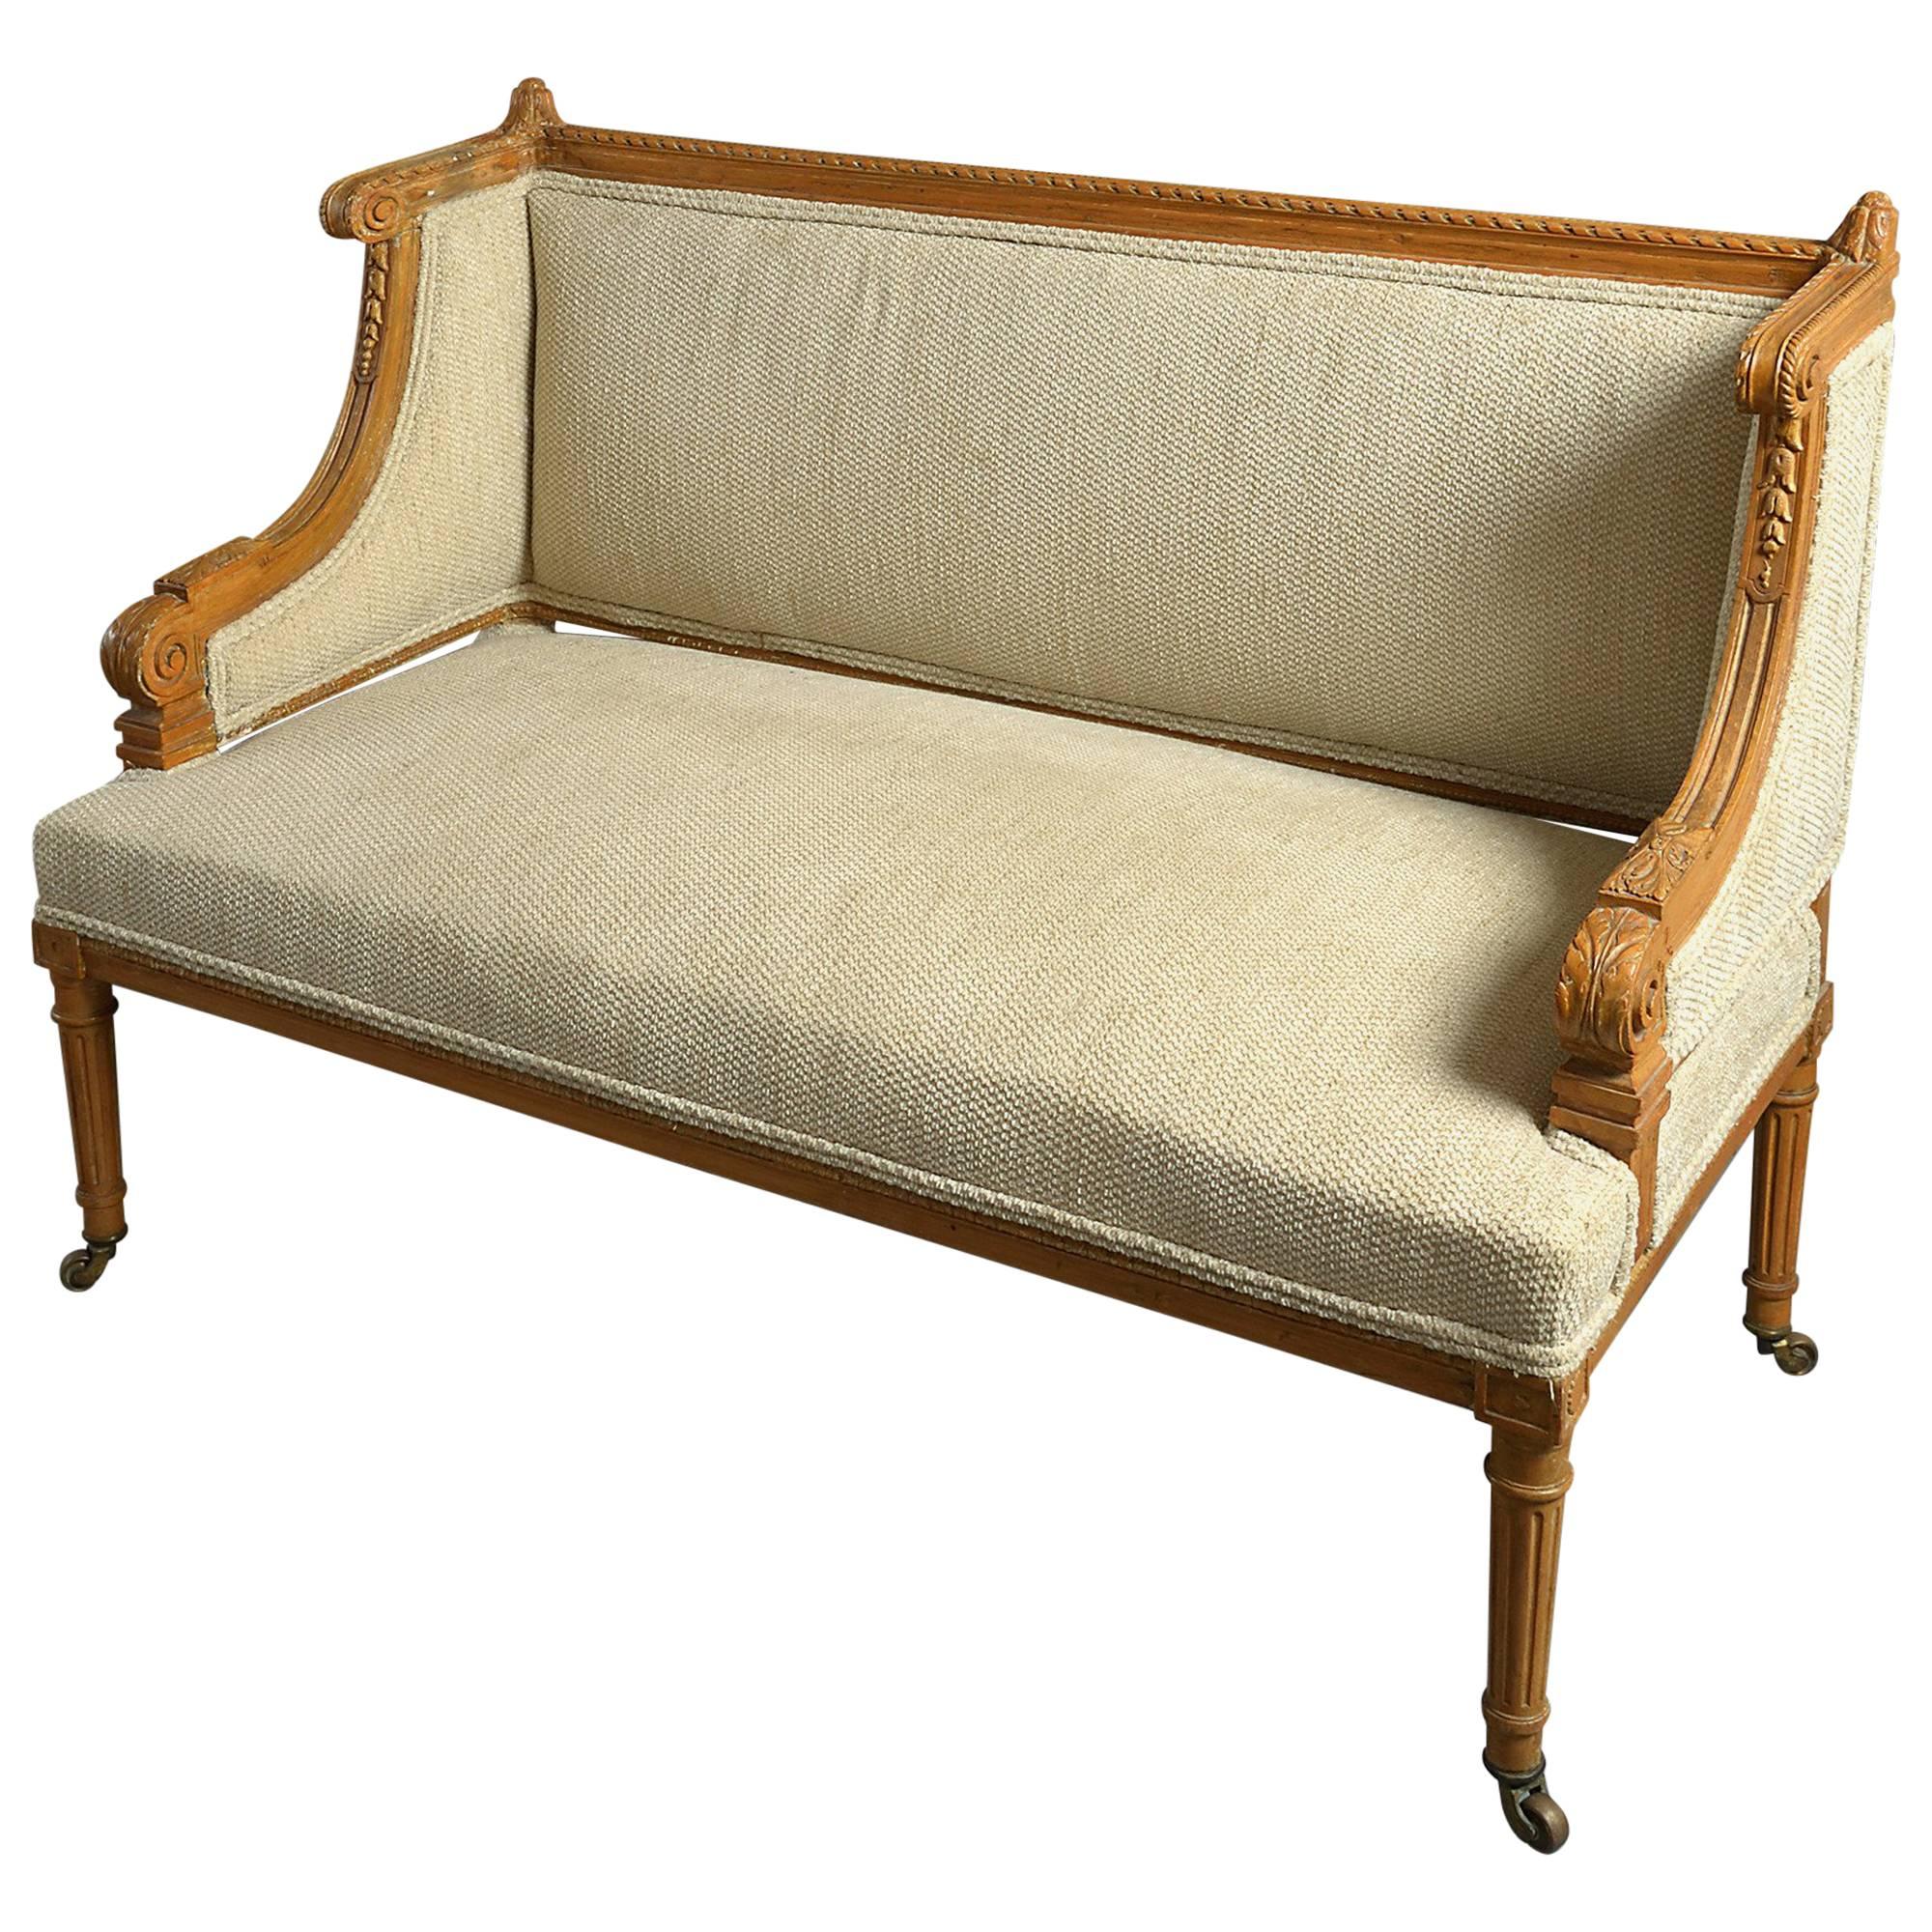 19th Century Louis XVI Style Carved Beechwood Canapé or Sofa